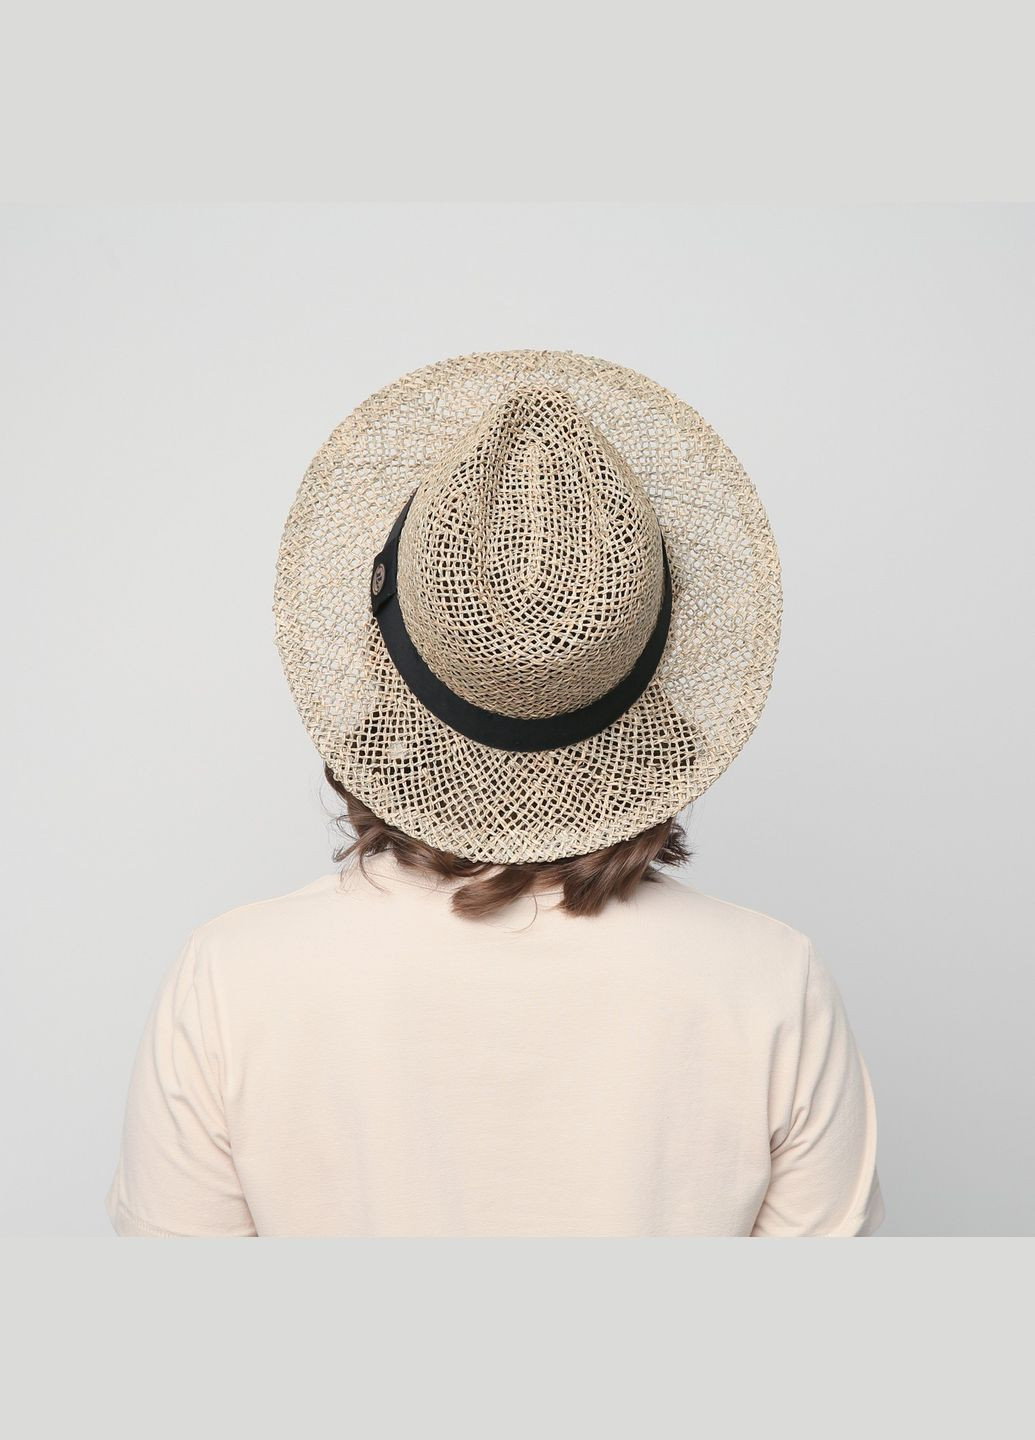 Шляпа федора женская солома желтая TERESA LuckyLOOK 844-217 (289478412)